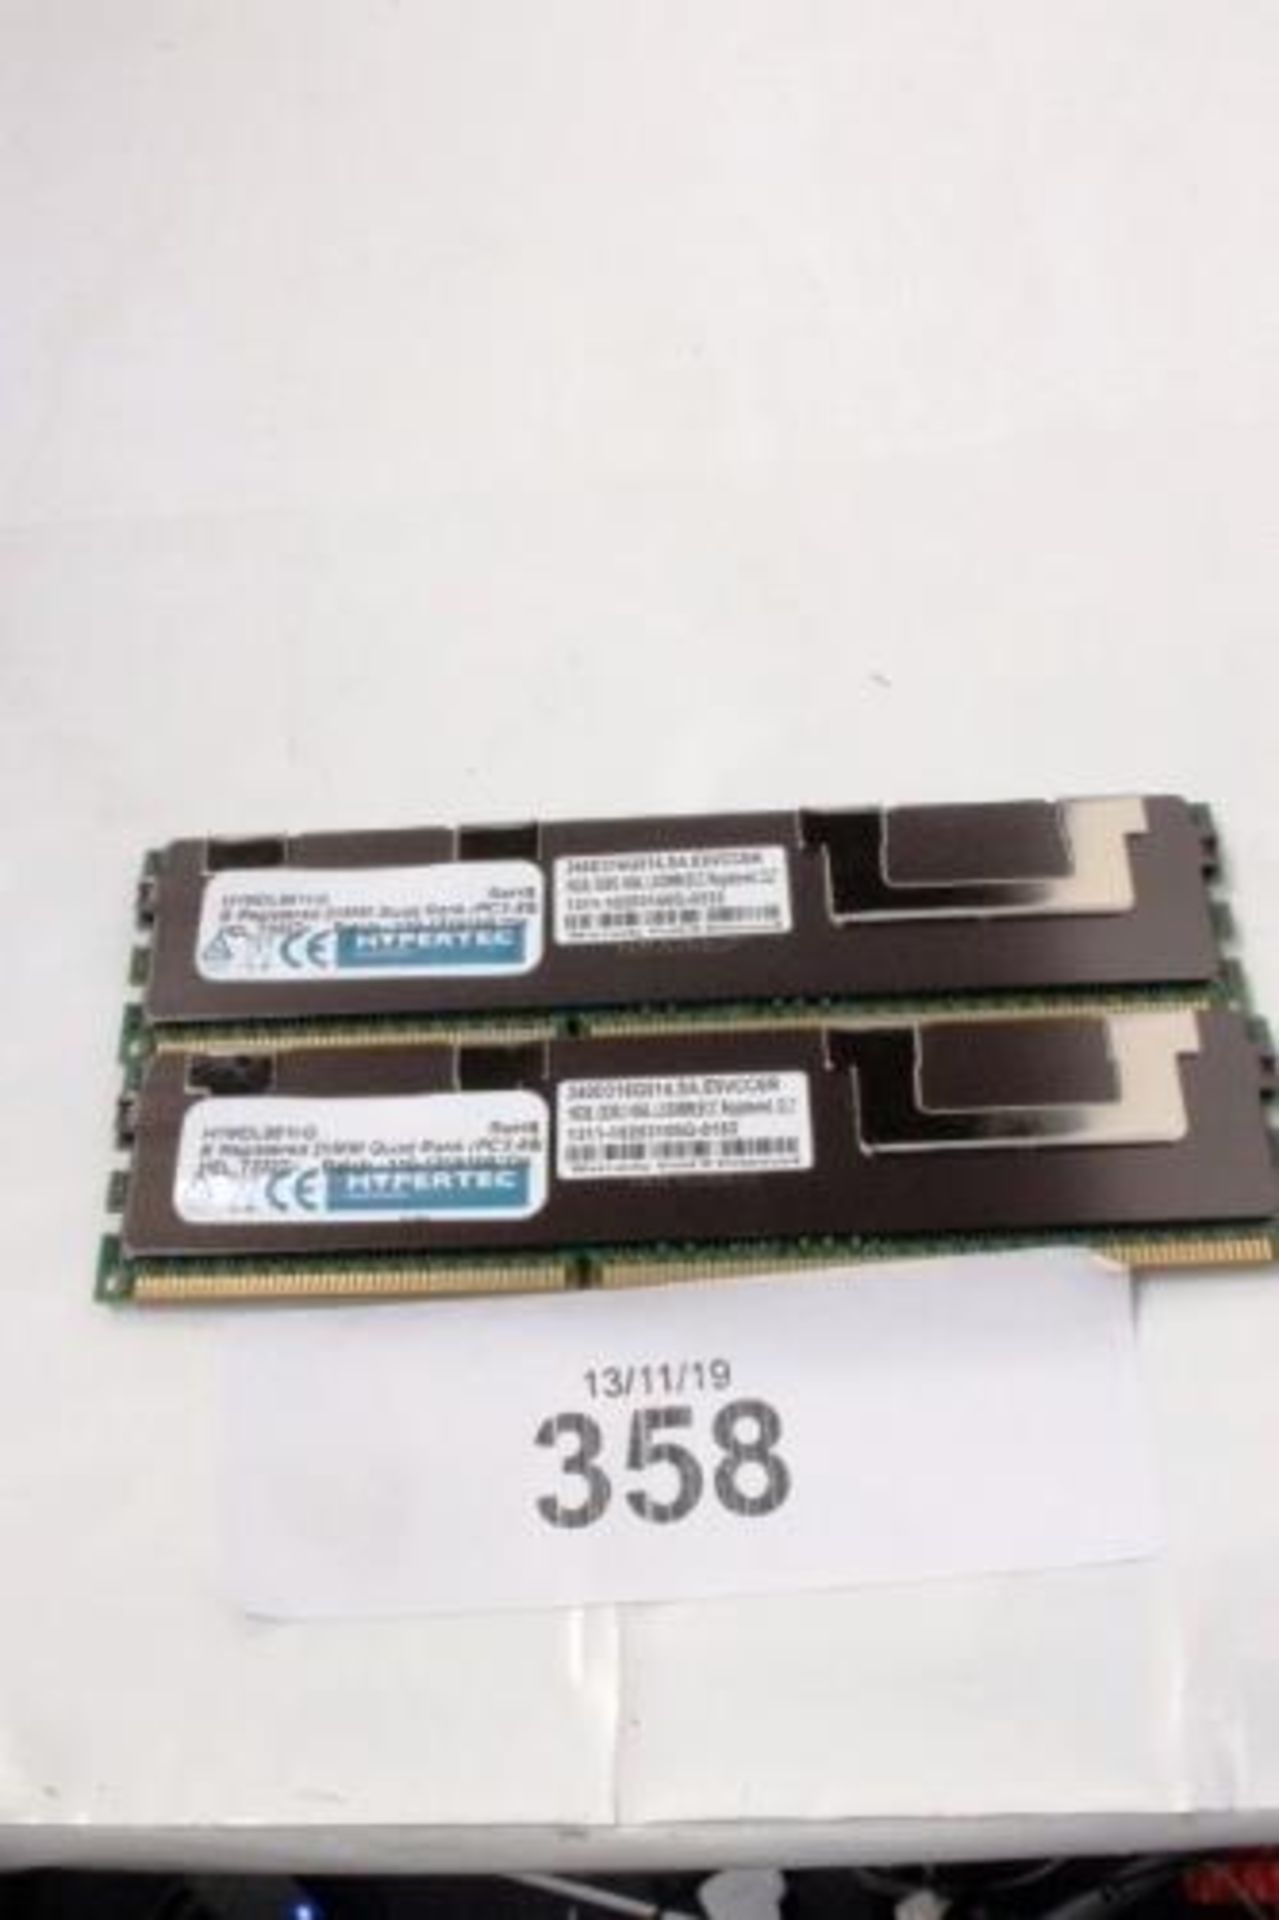 2 x Hypertec DDR3 16gb 8500R F3 memory cards, Ref: 240D316G014SA EOVCCER HYMDL8616G - New (C2)